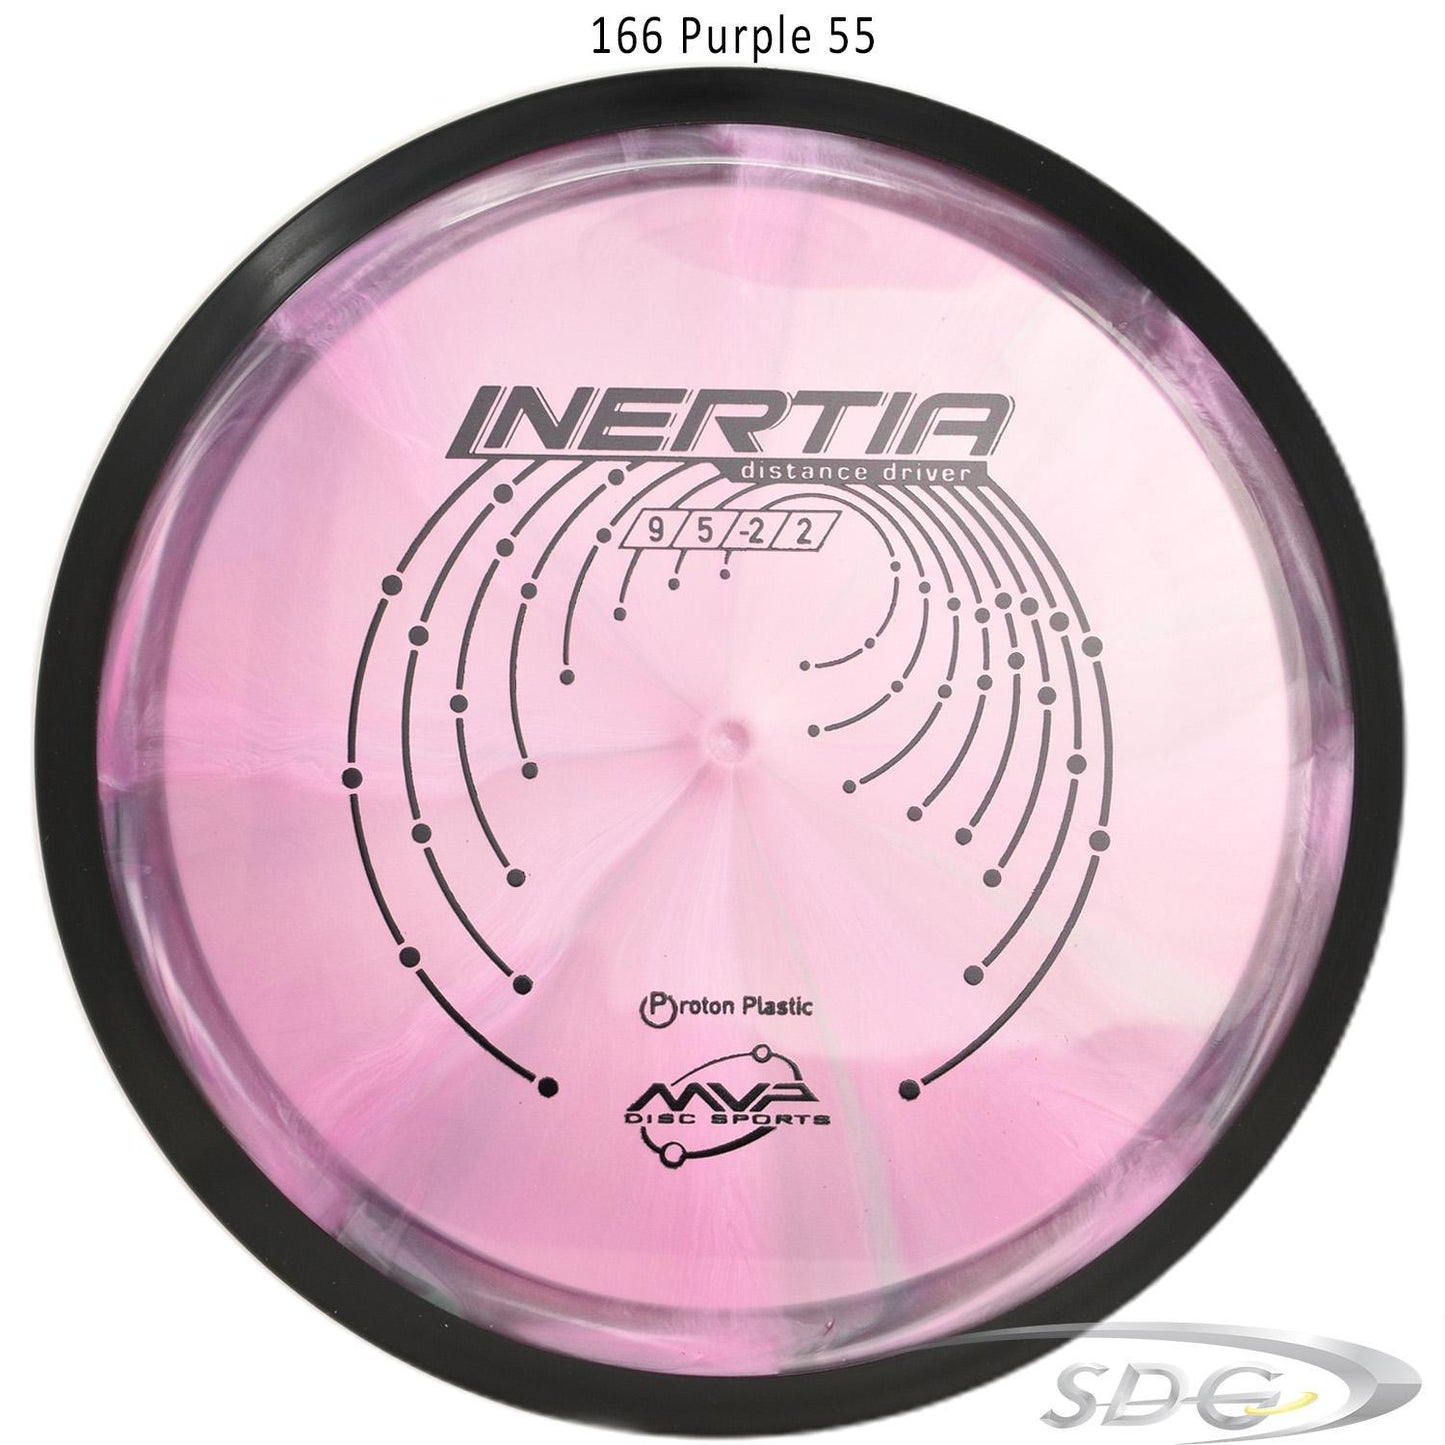 mvp-proton-inertia-disc-golf-distance-driver 166 Purple 55 